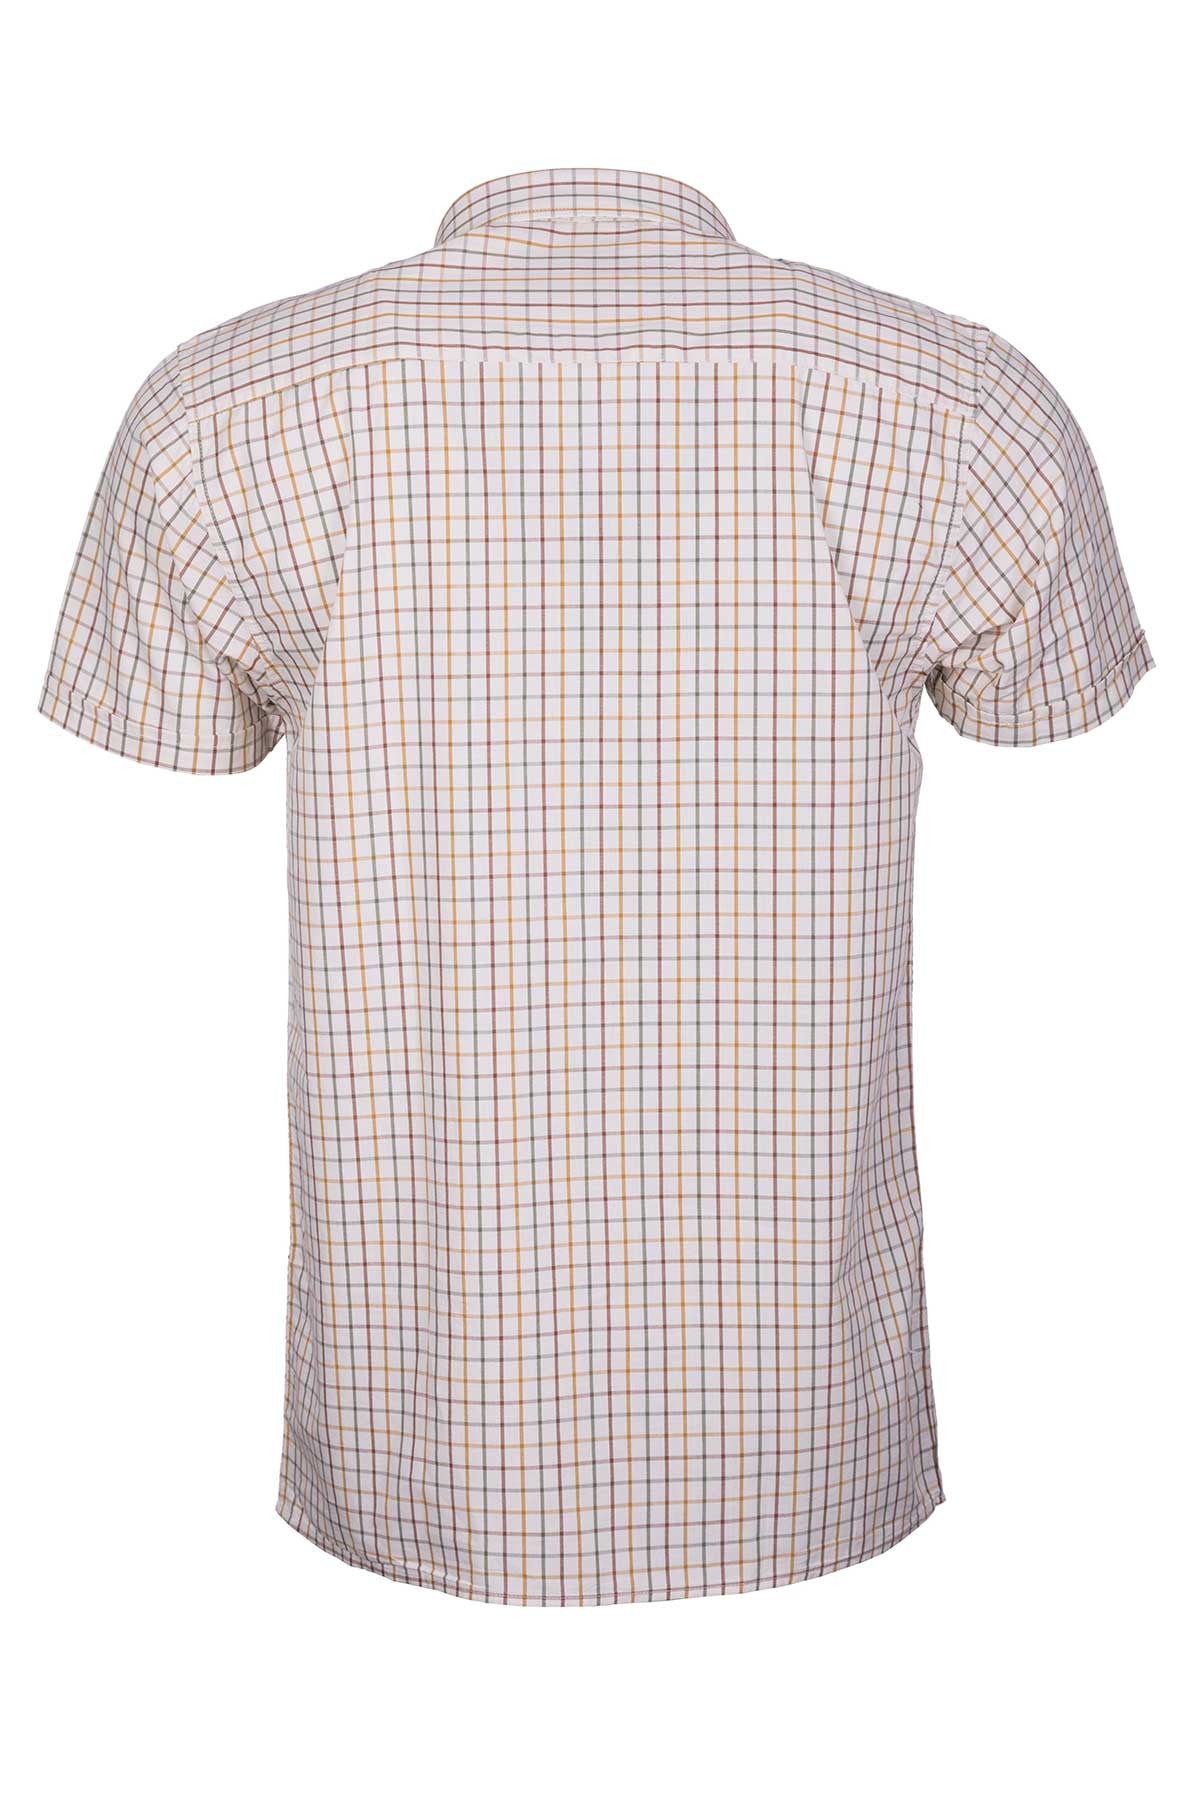 Mens Short Sleeved 100% Cotton Shirts UK | Rydale